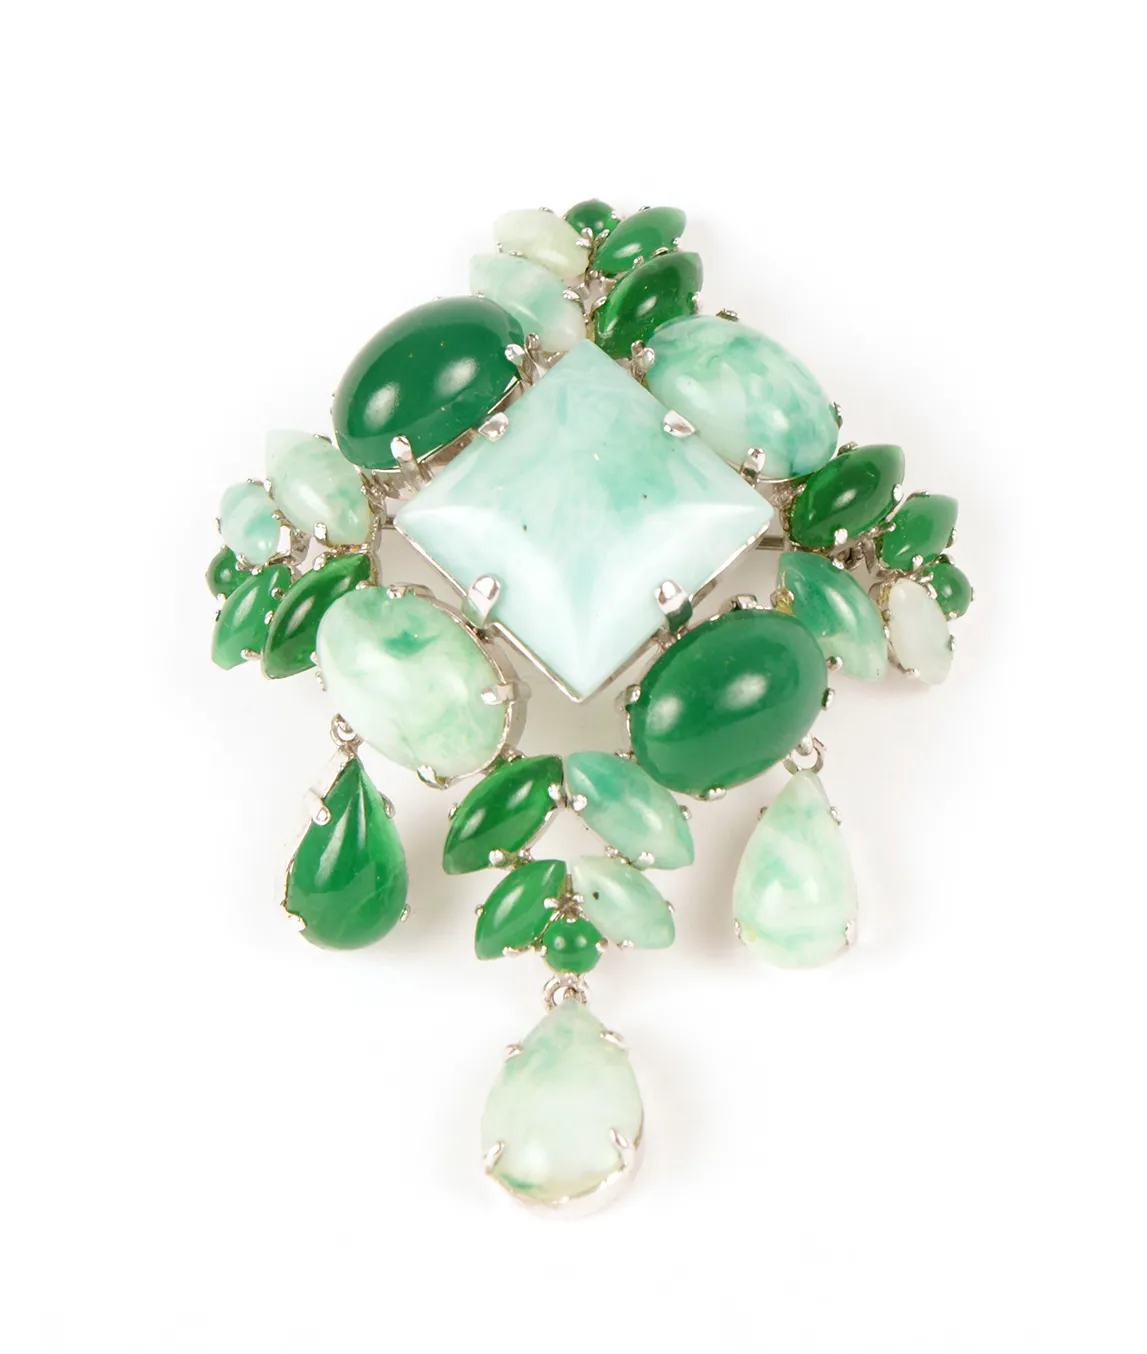 Vintage Dior brooch in green